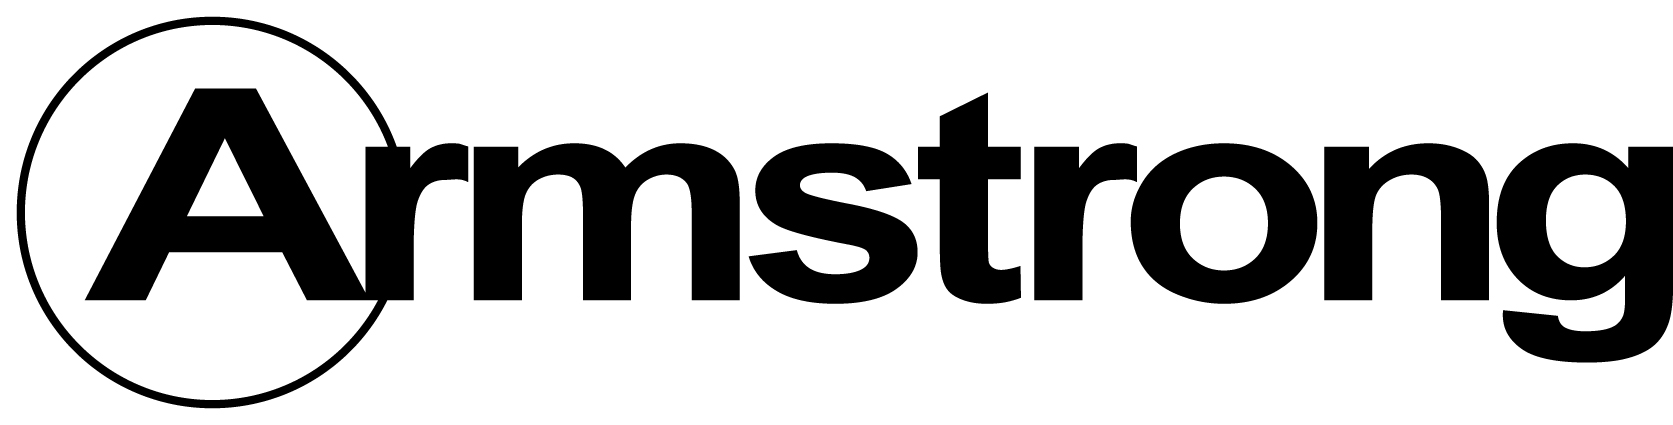 armstrong_industries_logo.jpg